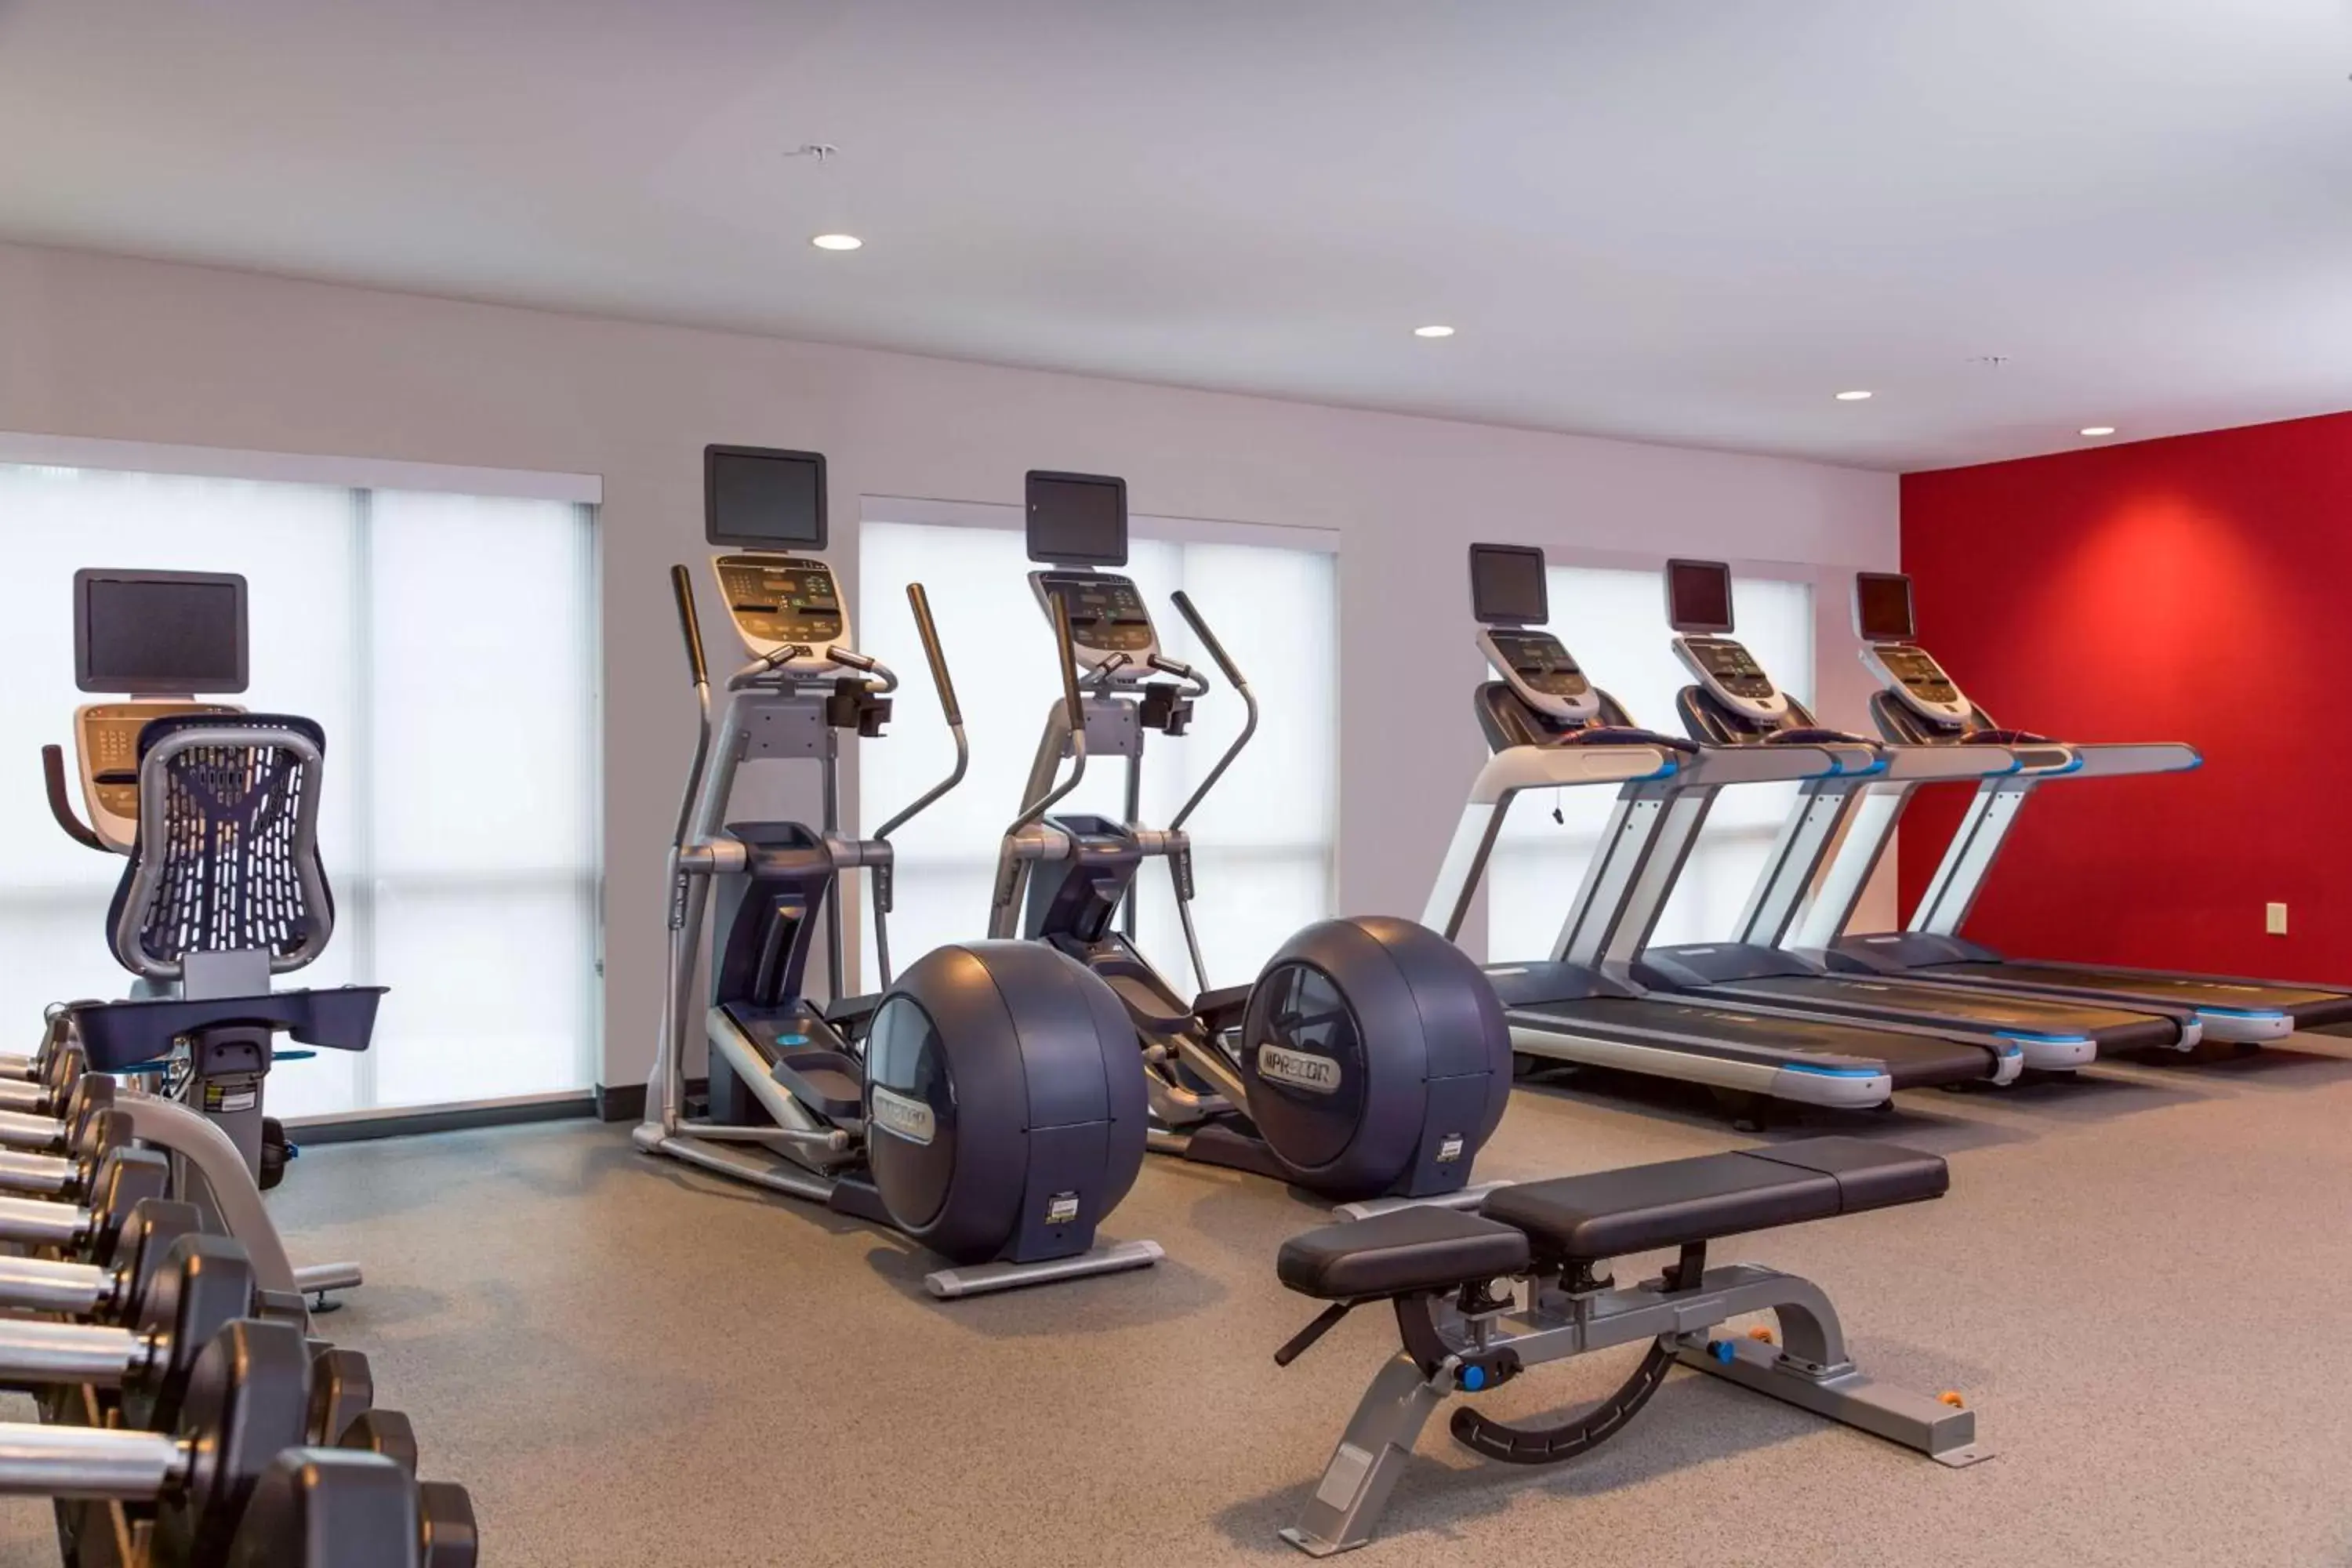 Fitness centre/facilities, Fitness Center/Facilities in Hilton Garden Inn Burlington Downtown